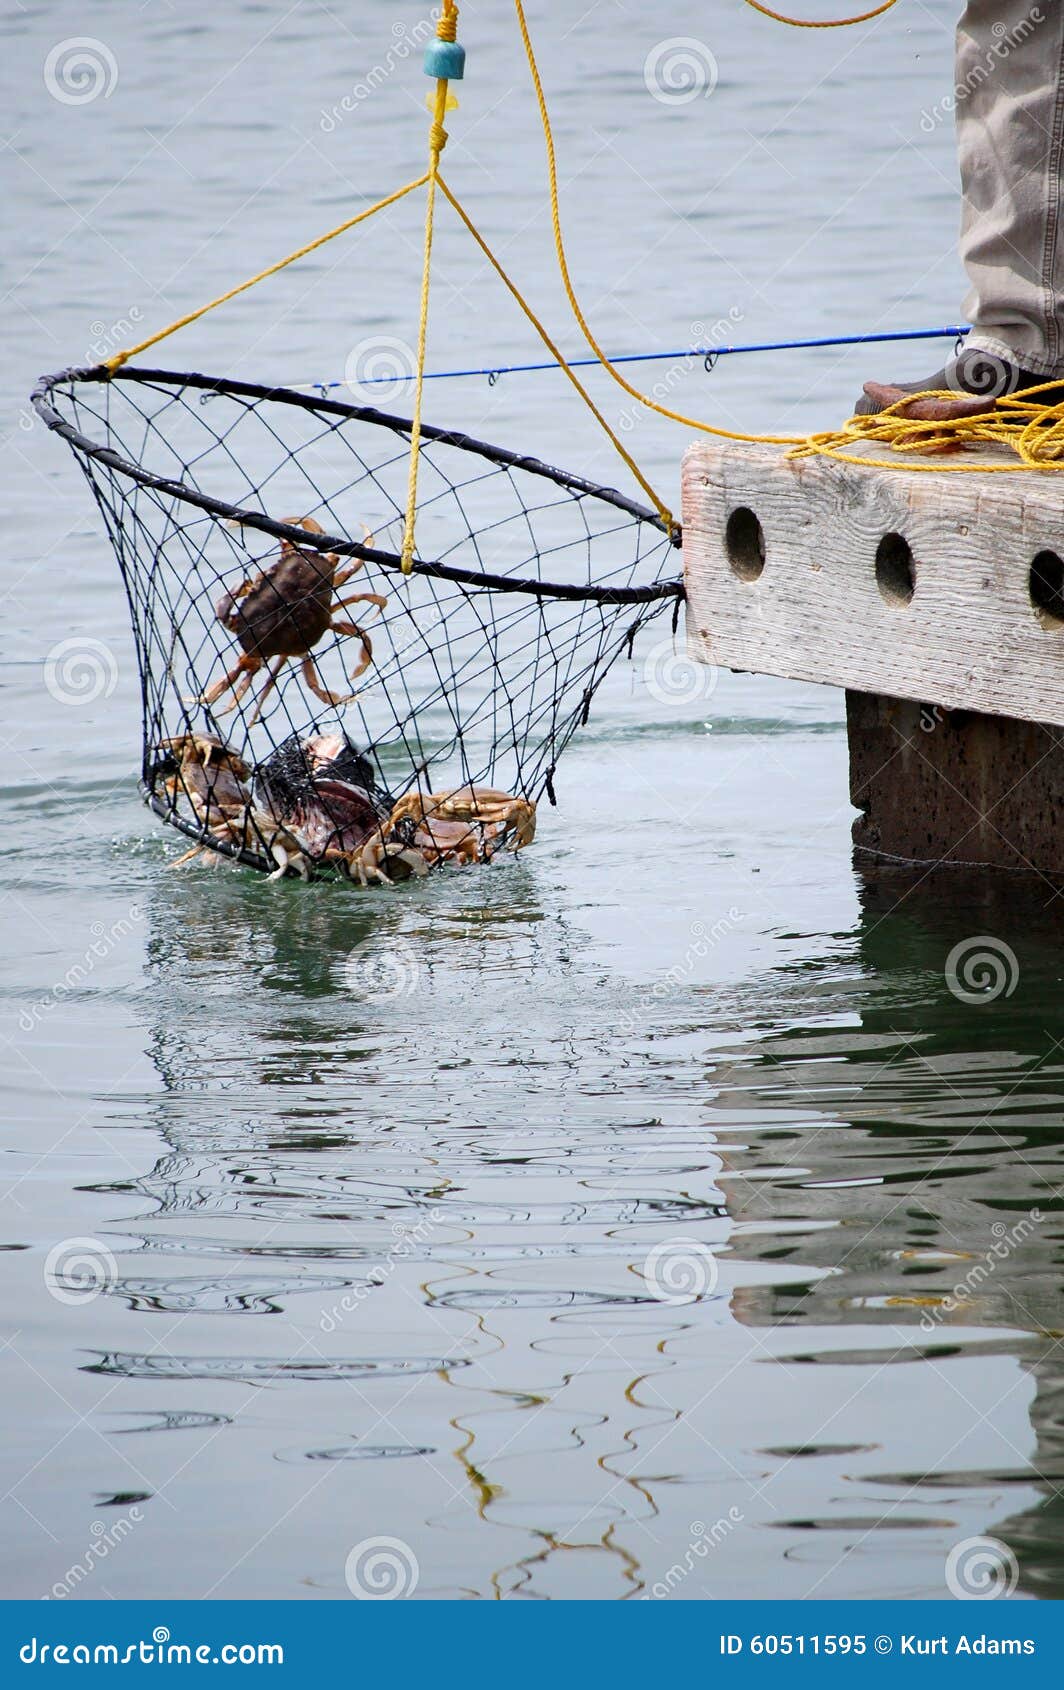 https://thumbs.dreamstime.com/z/washington-crabbing-catching-crabs-pier-western-state-60511595.jpg